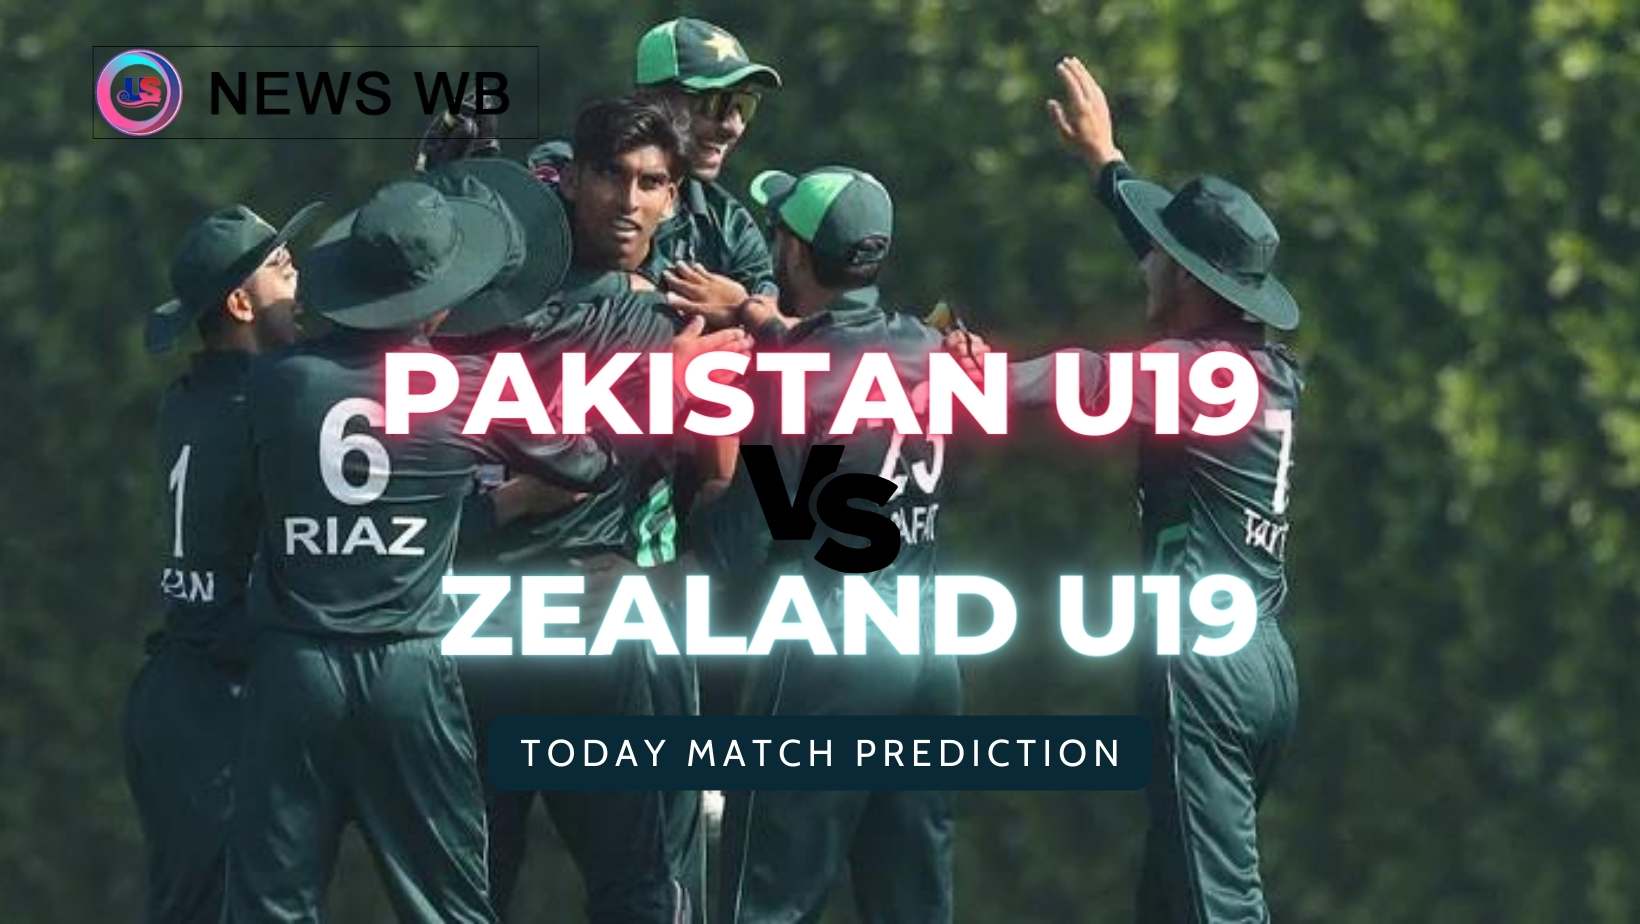 Today Match Prediction: PAK U19 vs NZ U19 Dream11 Team, Pakistan U19 vs New Zealand U19 22nd Match, Group D, Who Will Win?